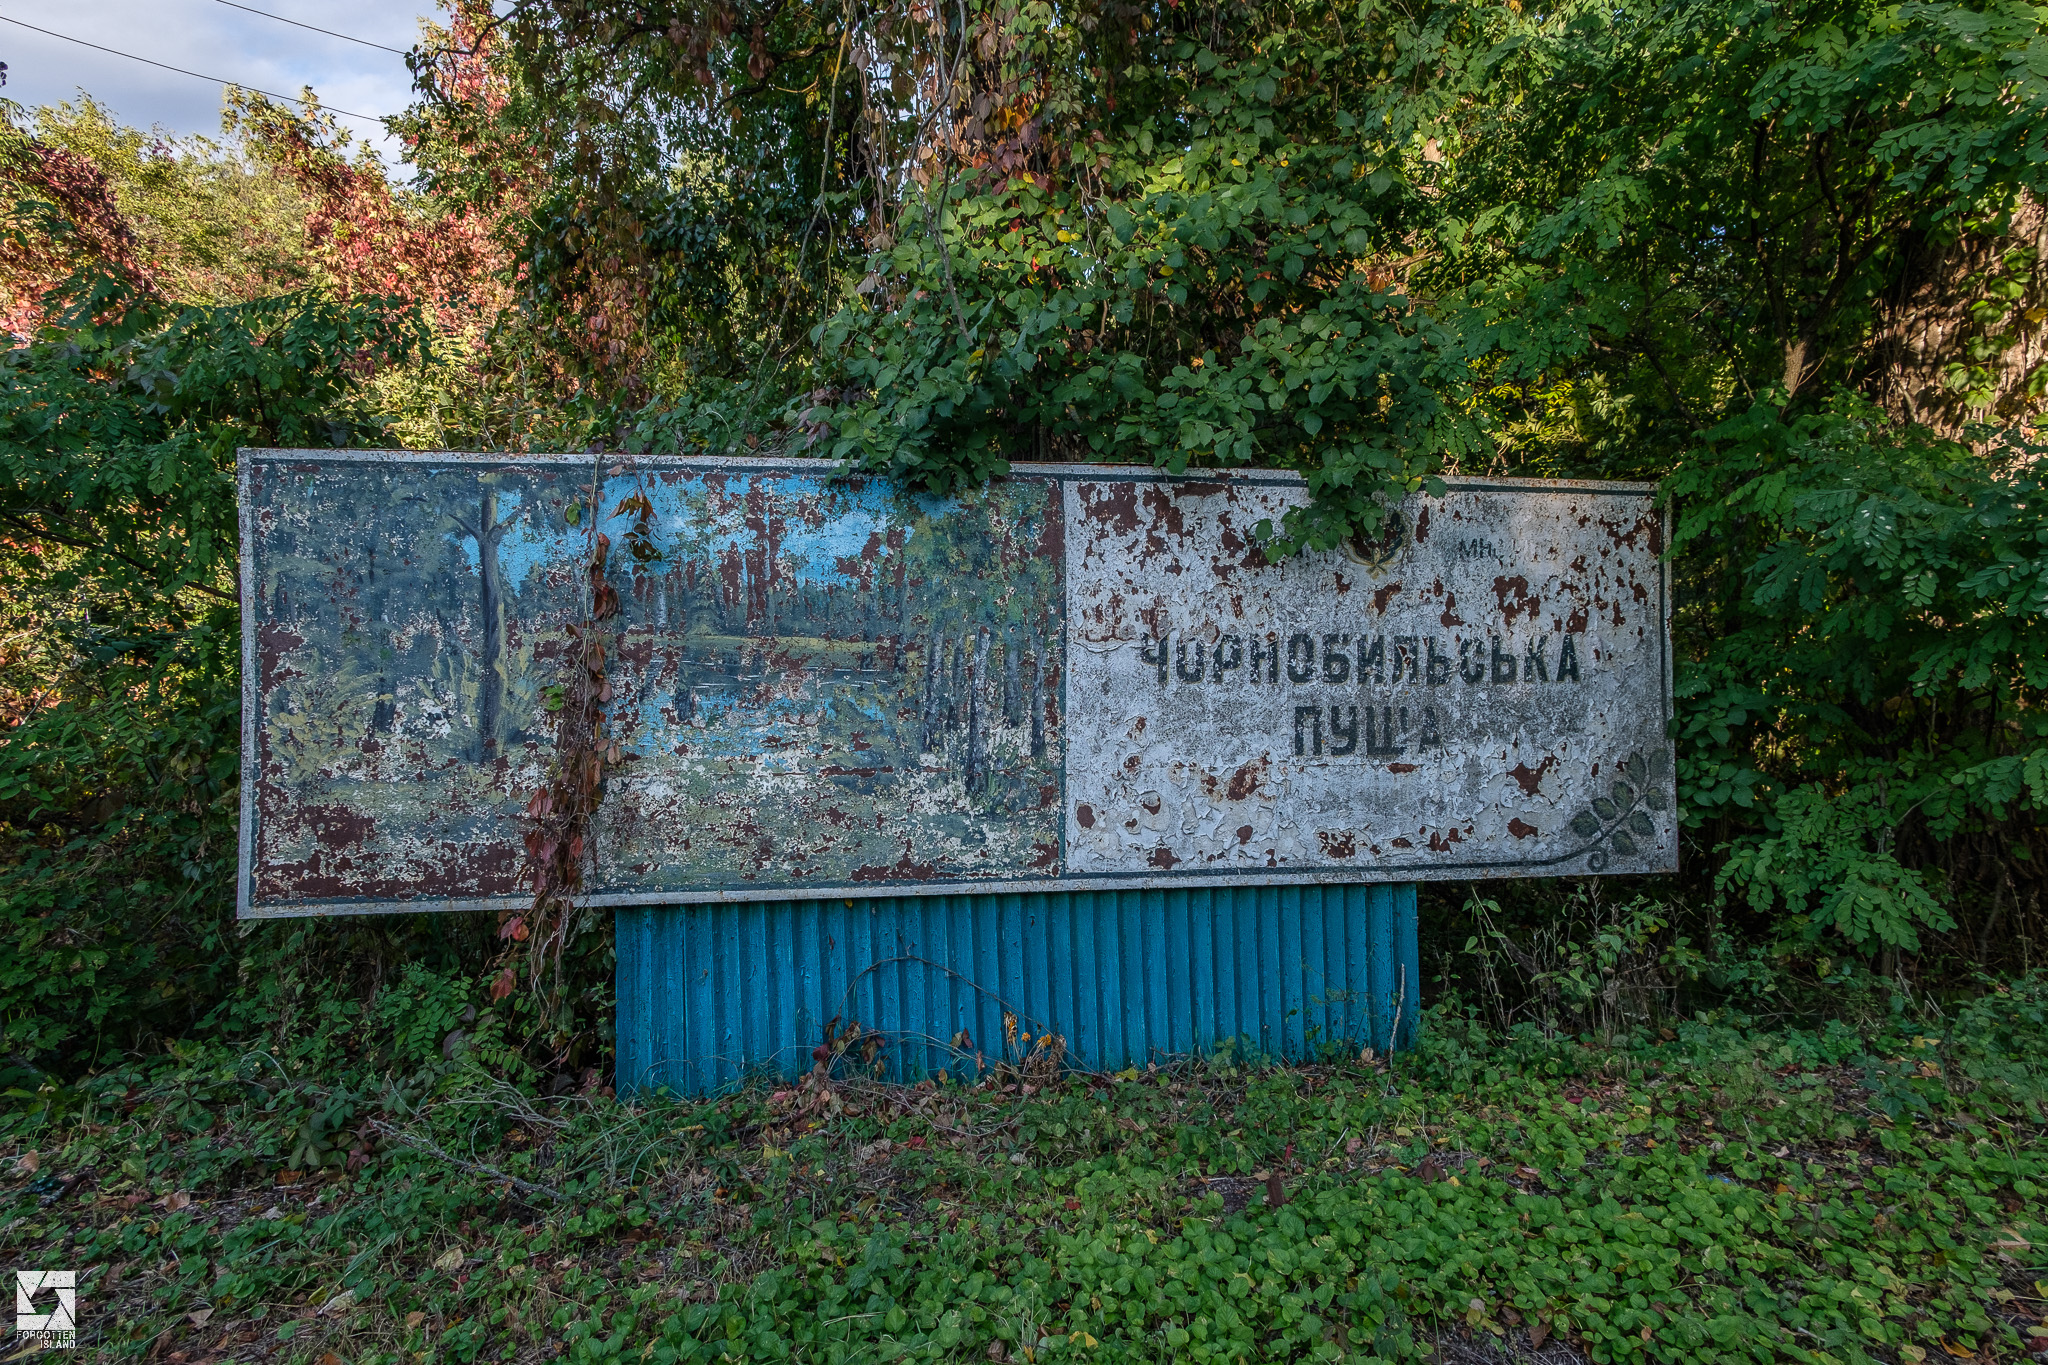 Chernobyl City Today